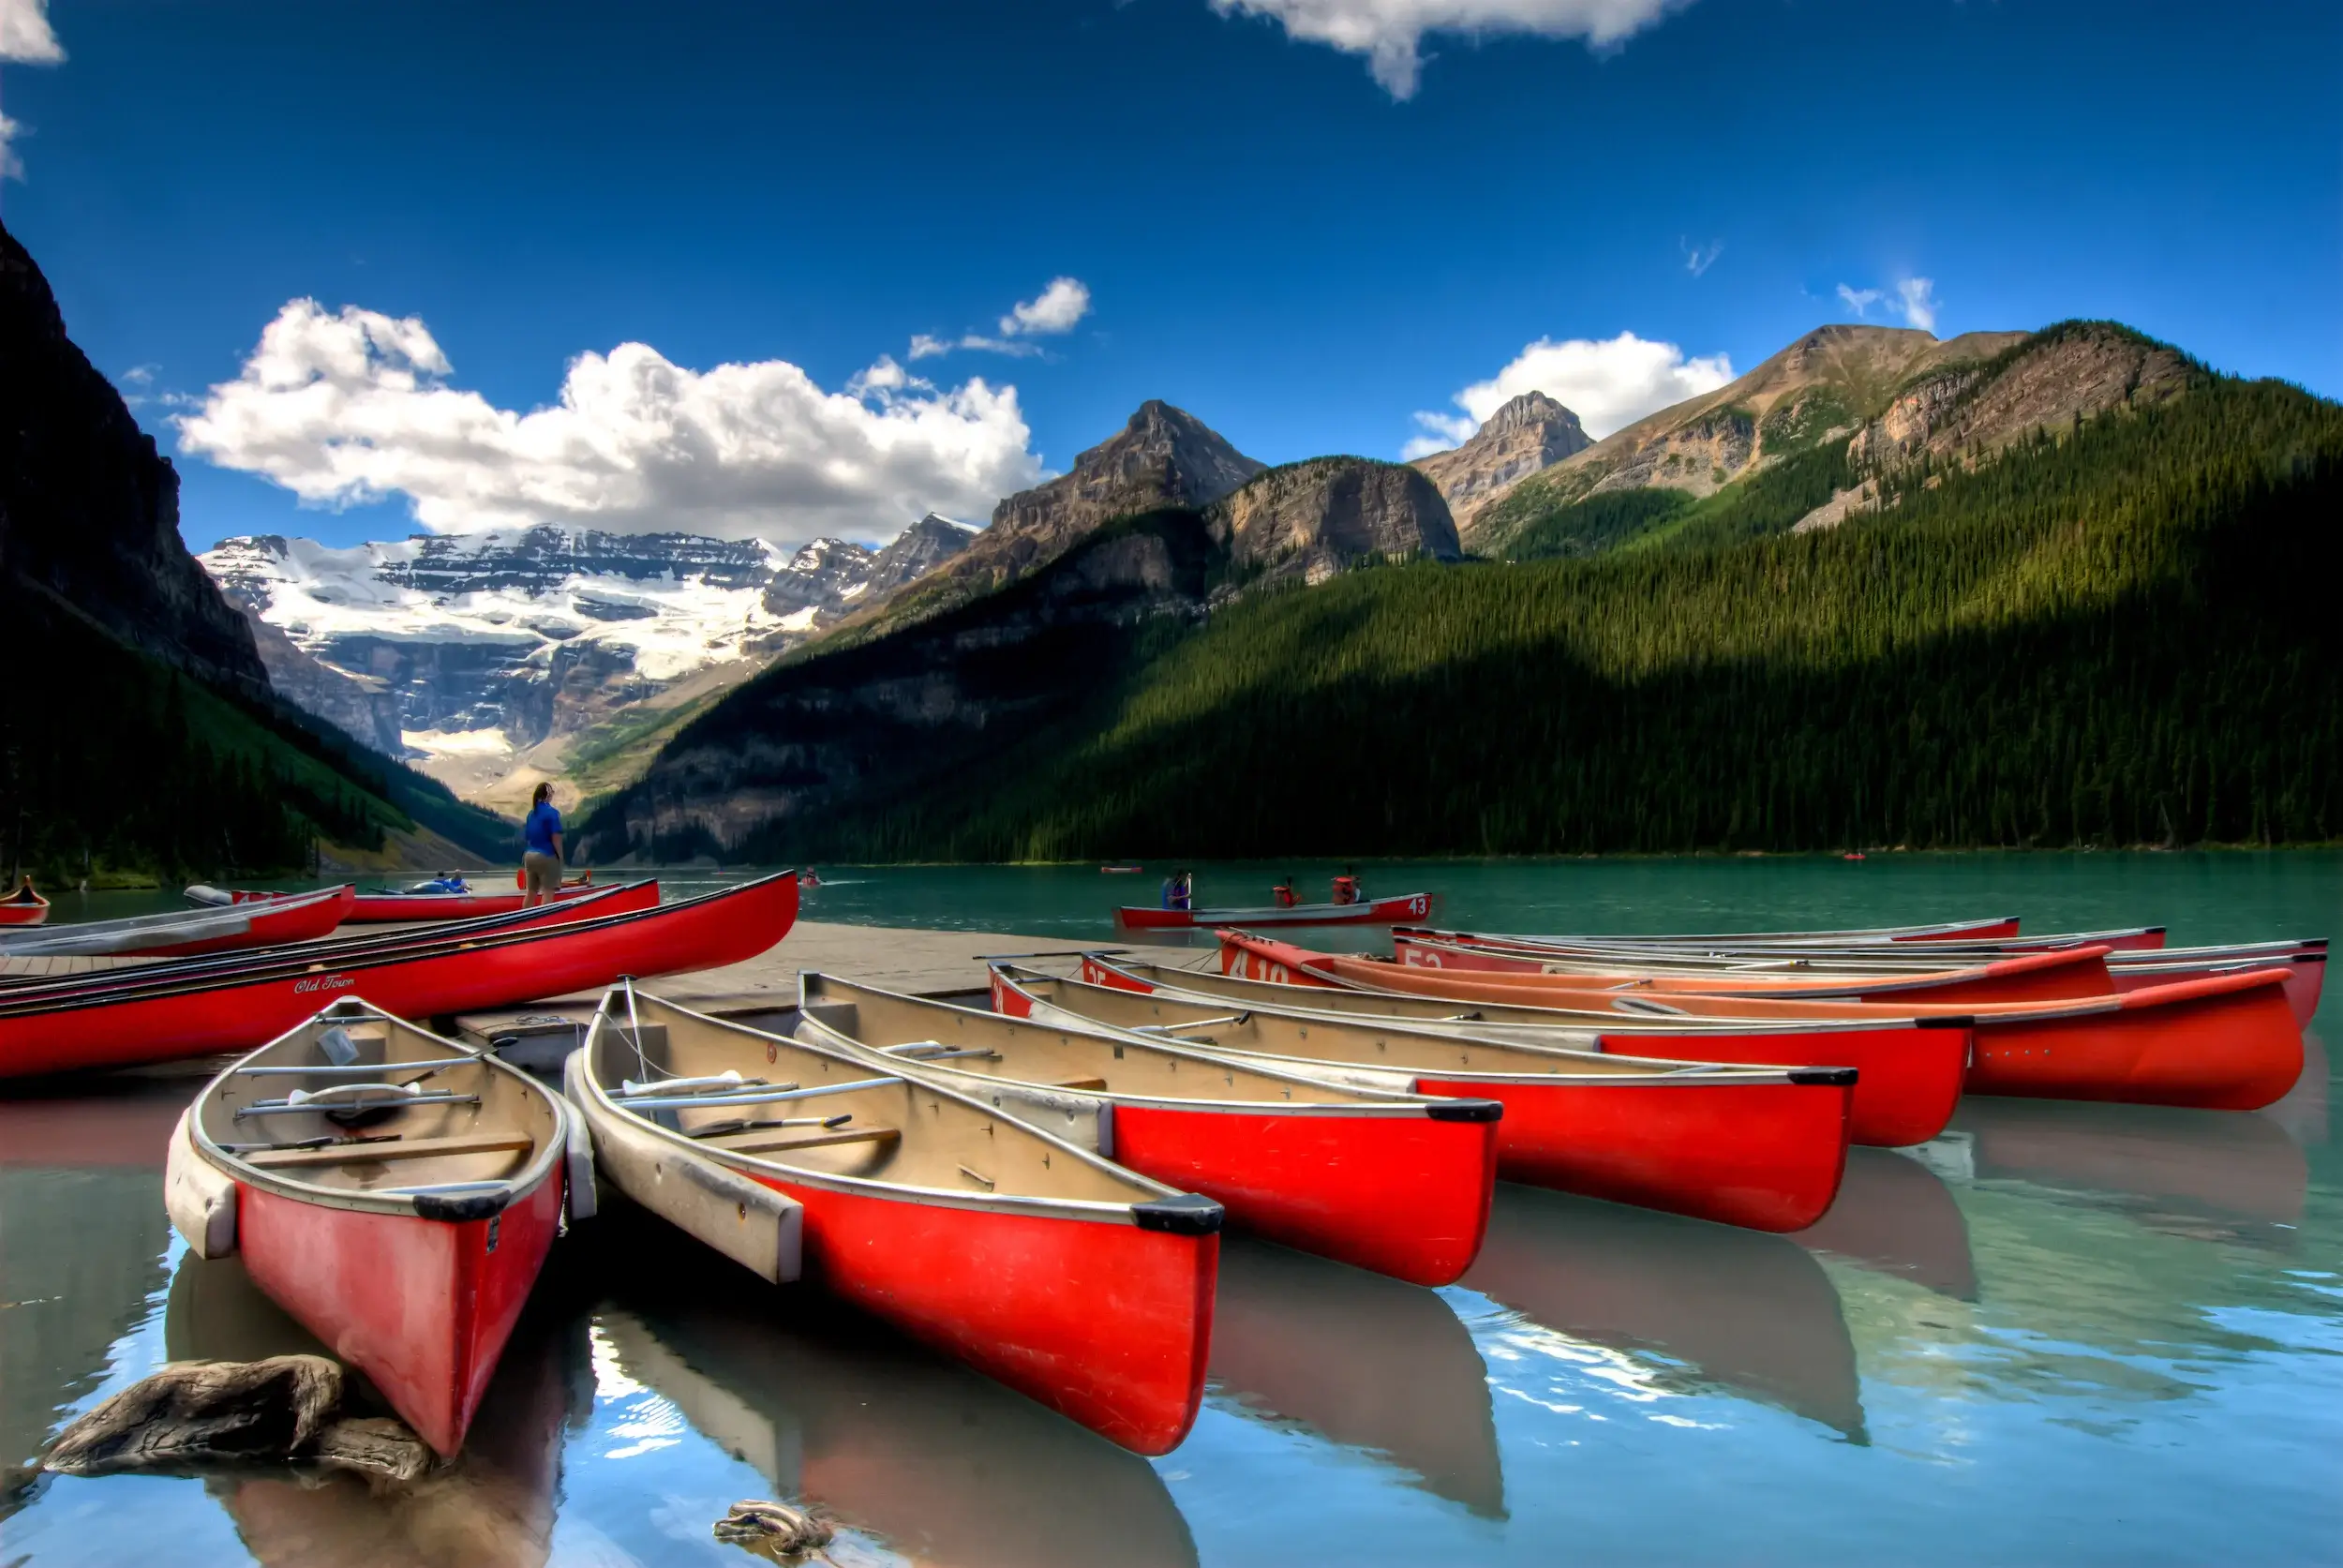 Banff National Park, Alberta, Canoes on the lake.